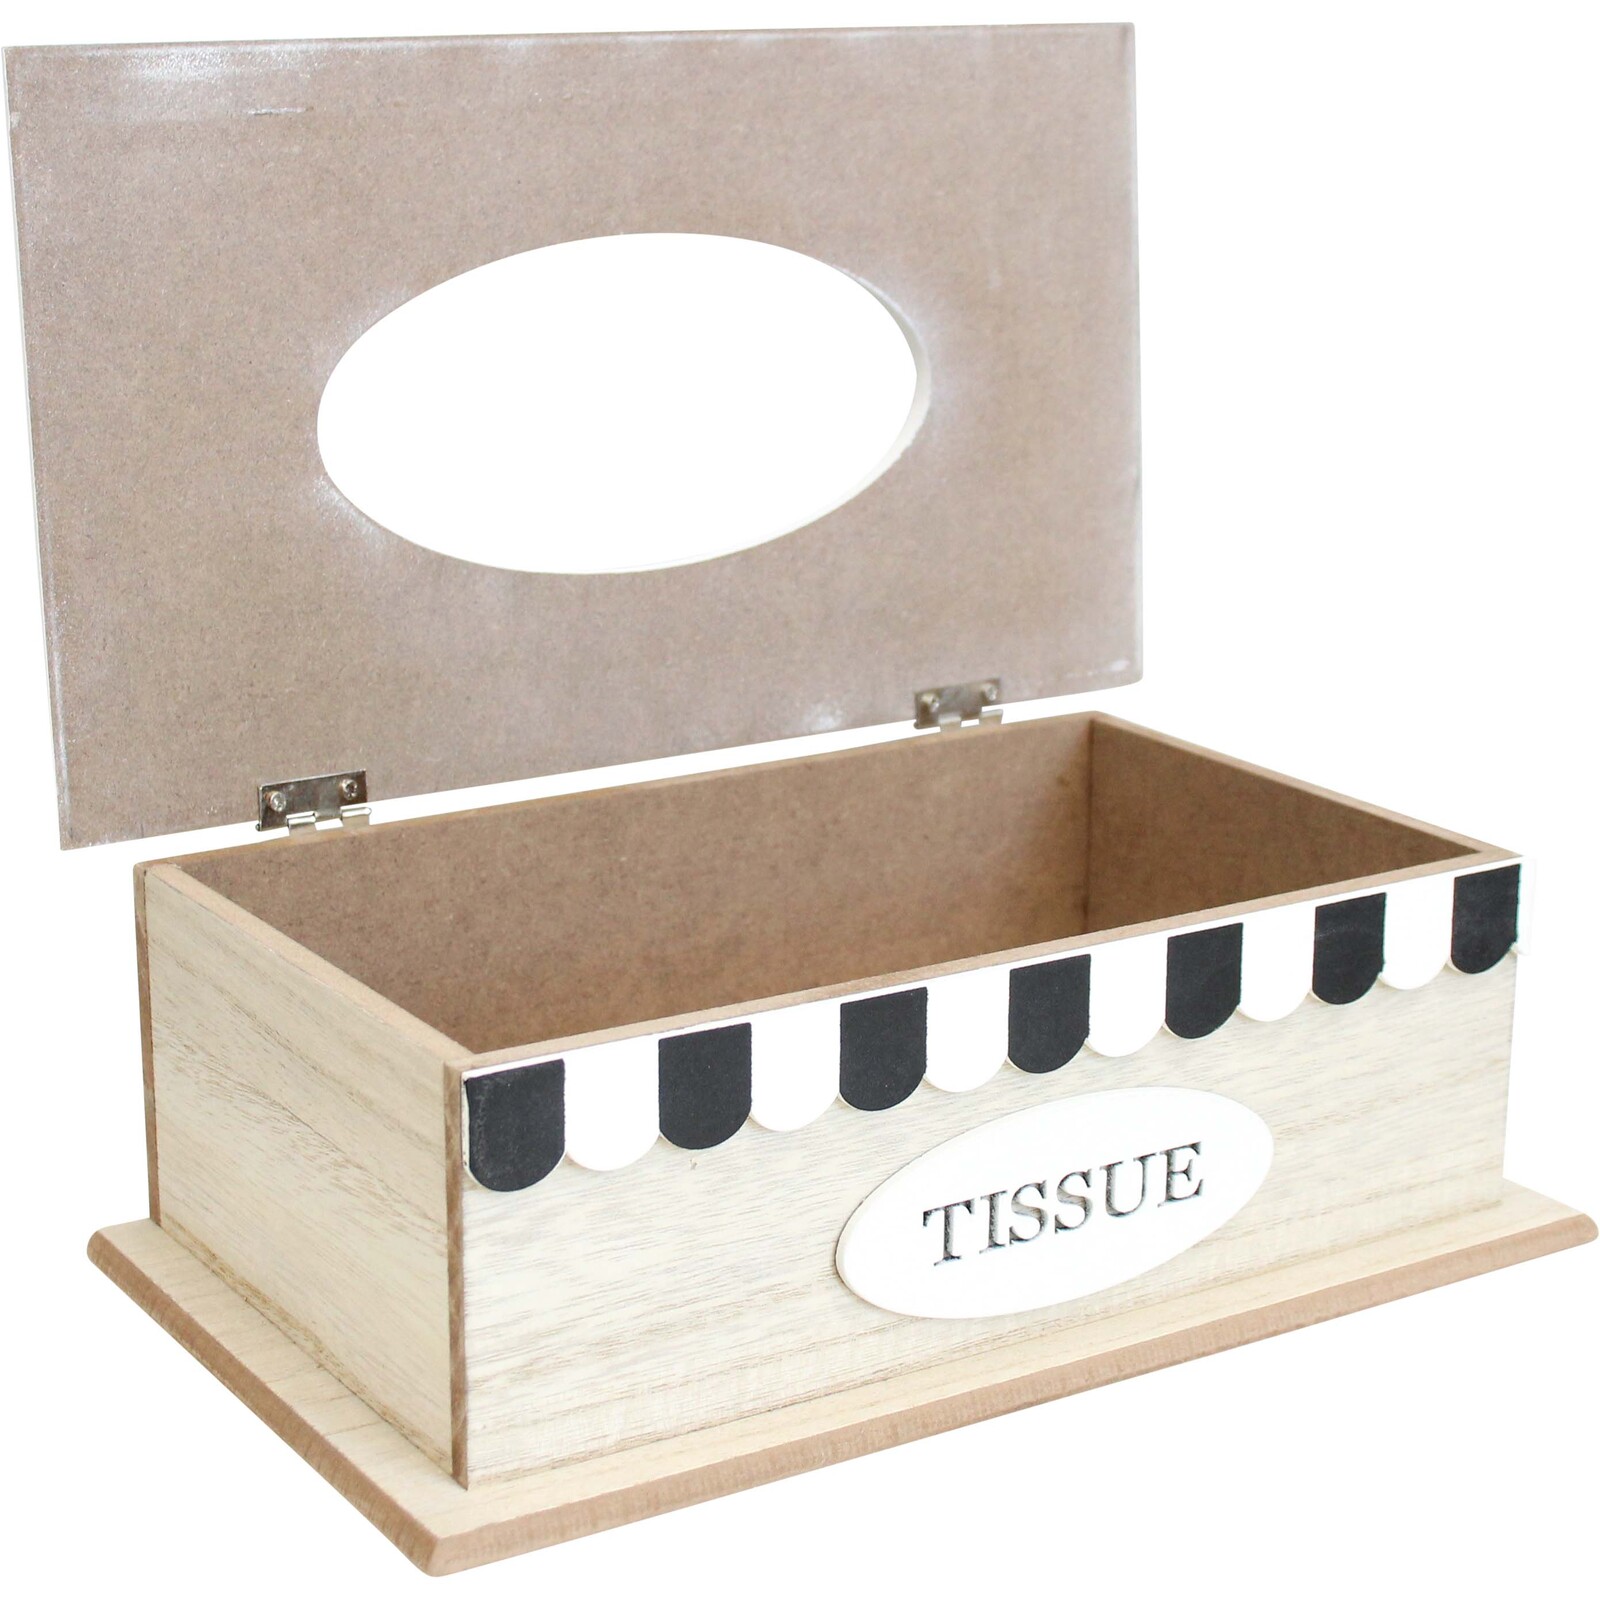 Tissue Box Cafe